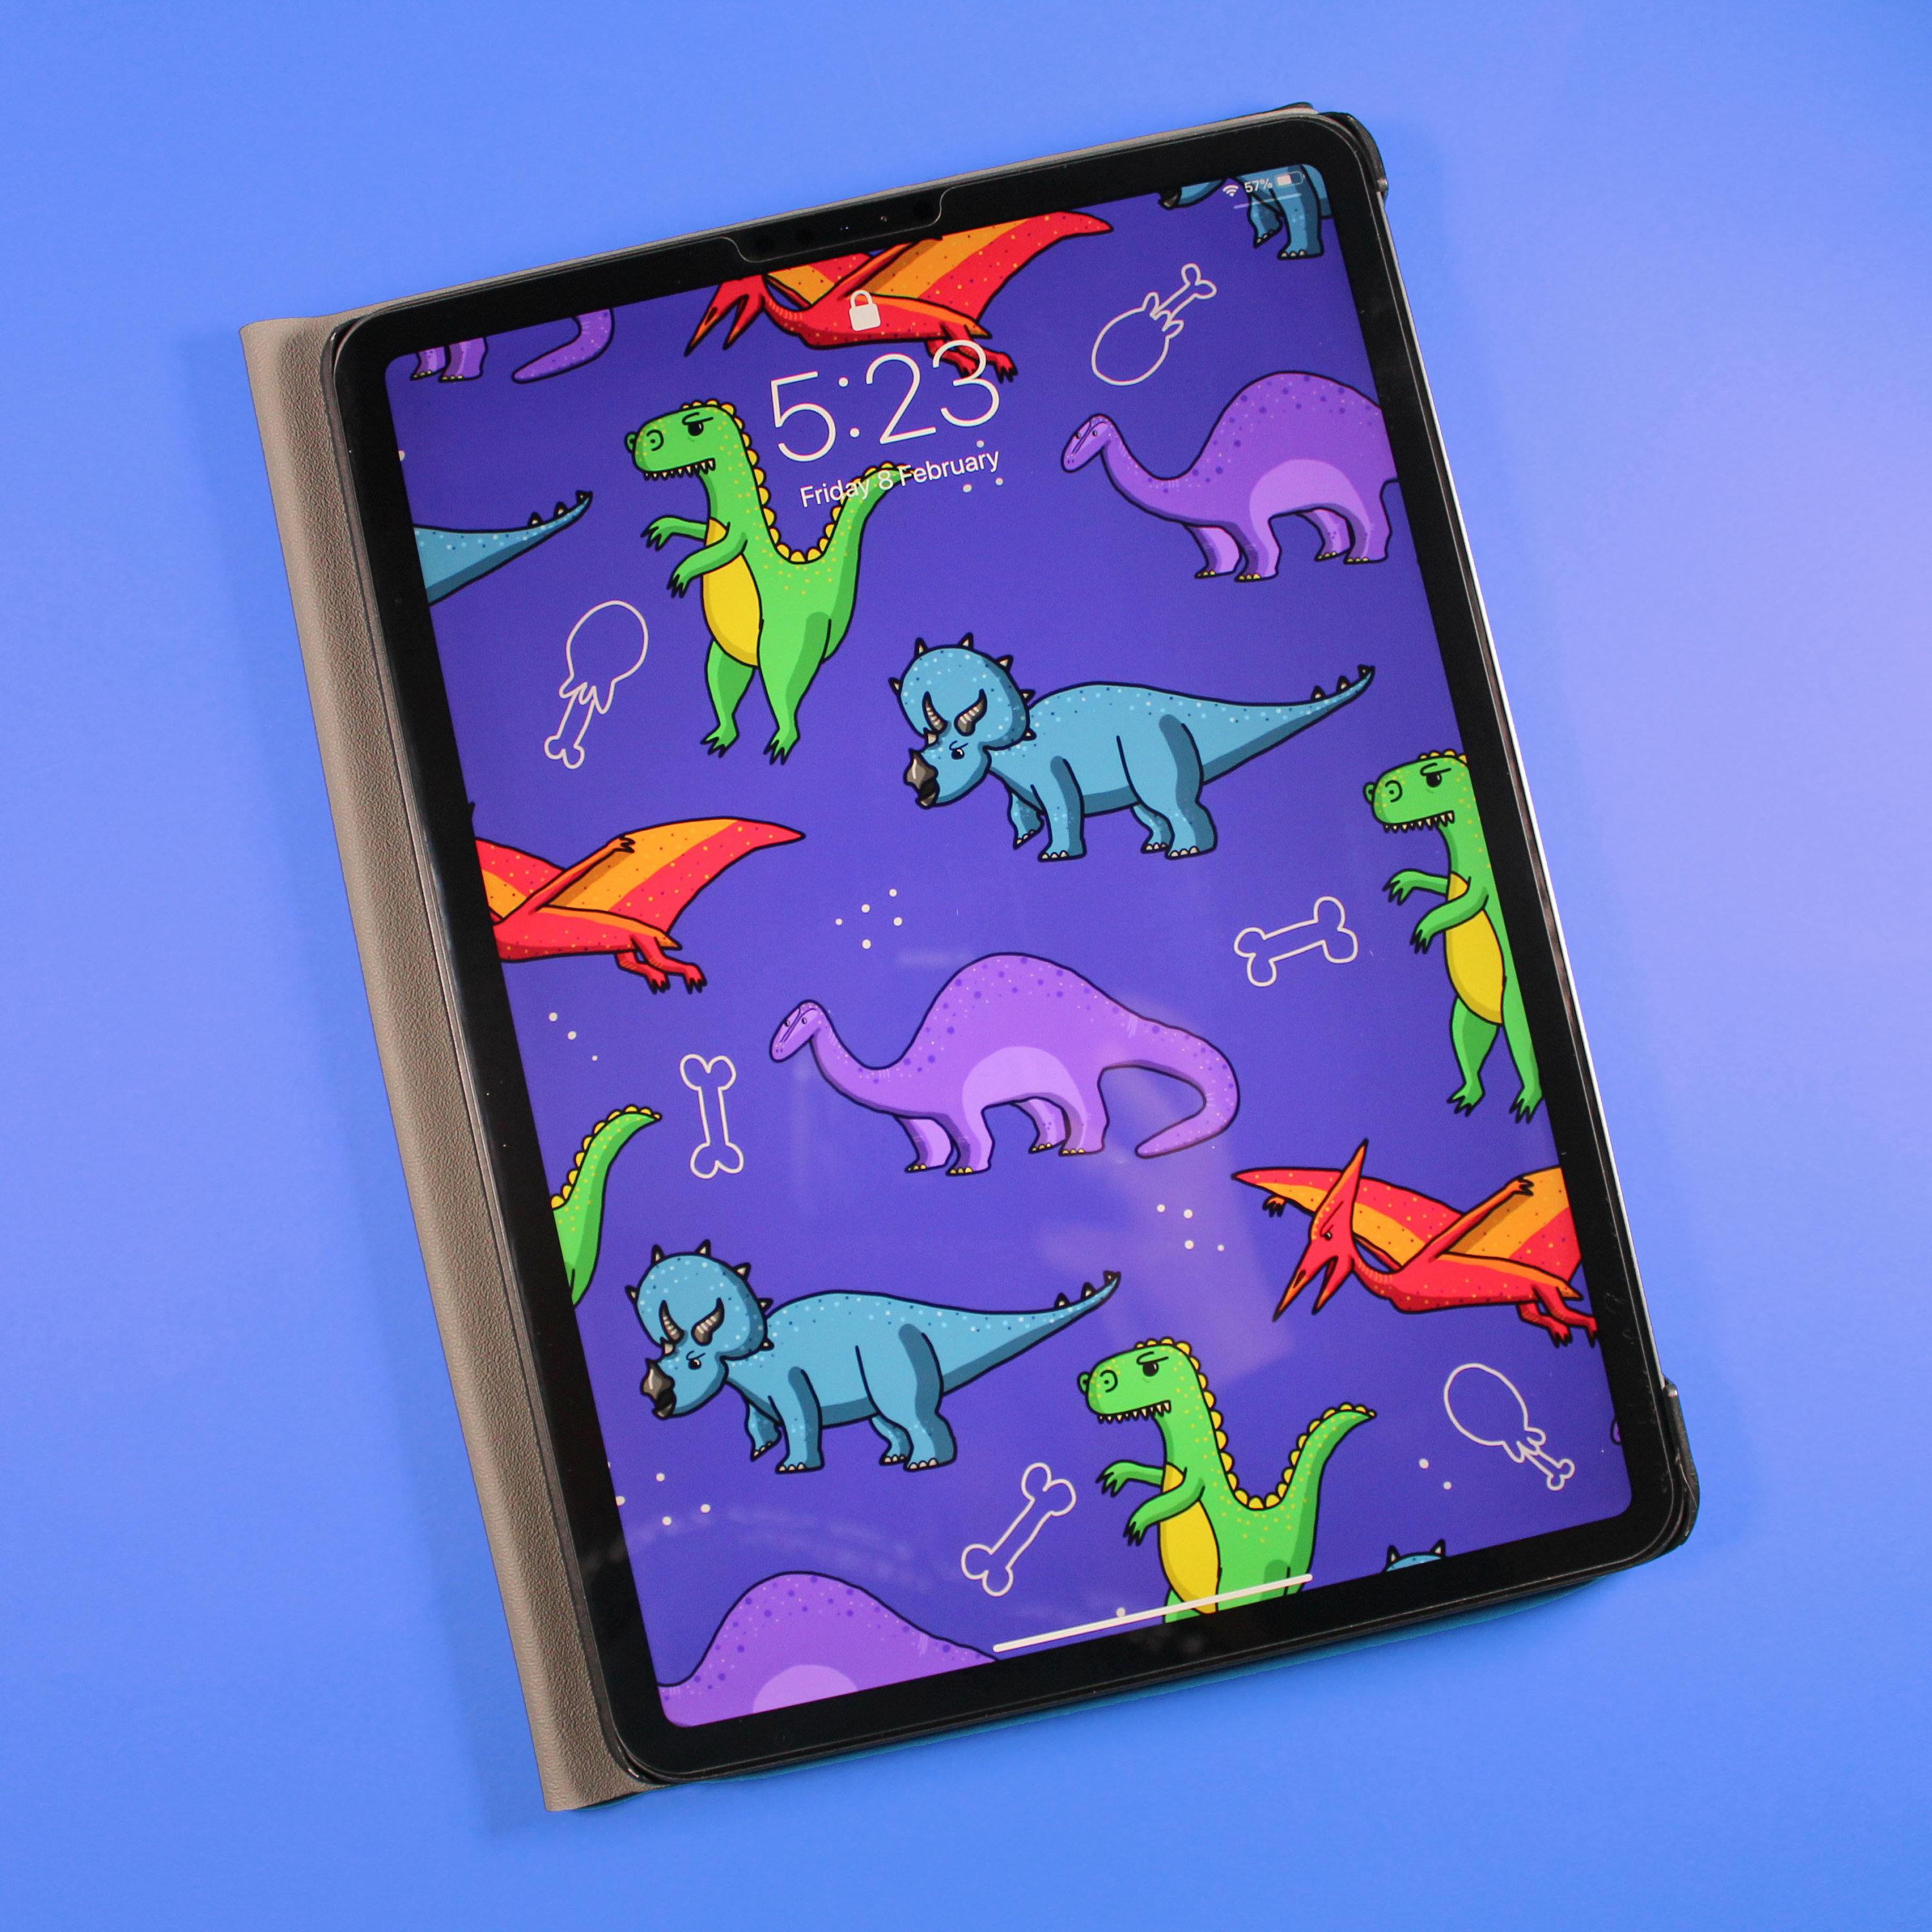 2048x2048 Resolution Dinosaur In No Mans Sky Game Ipad Air Wallpaper   Wallpapers Den